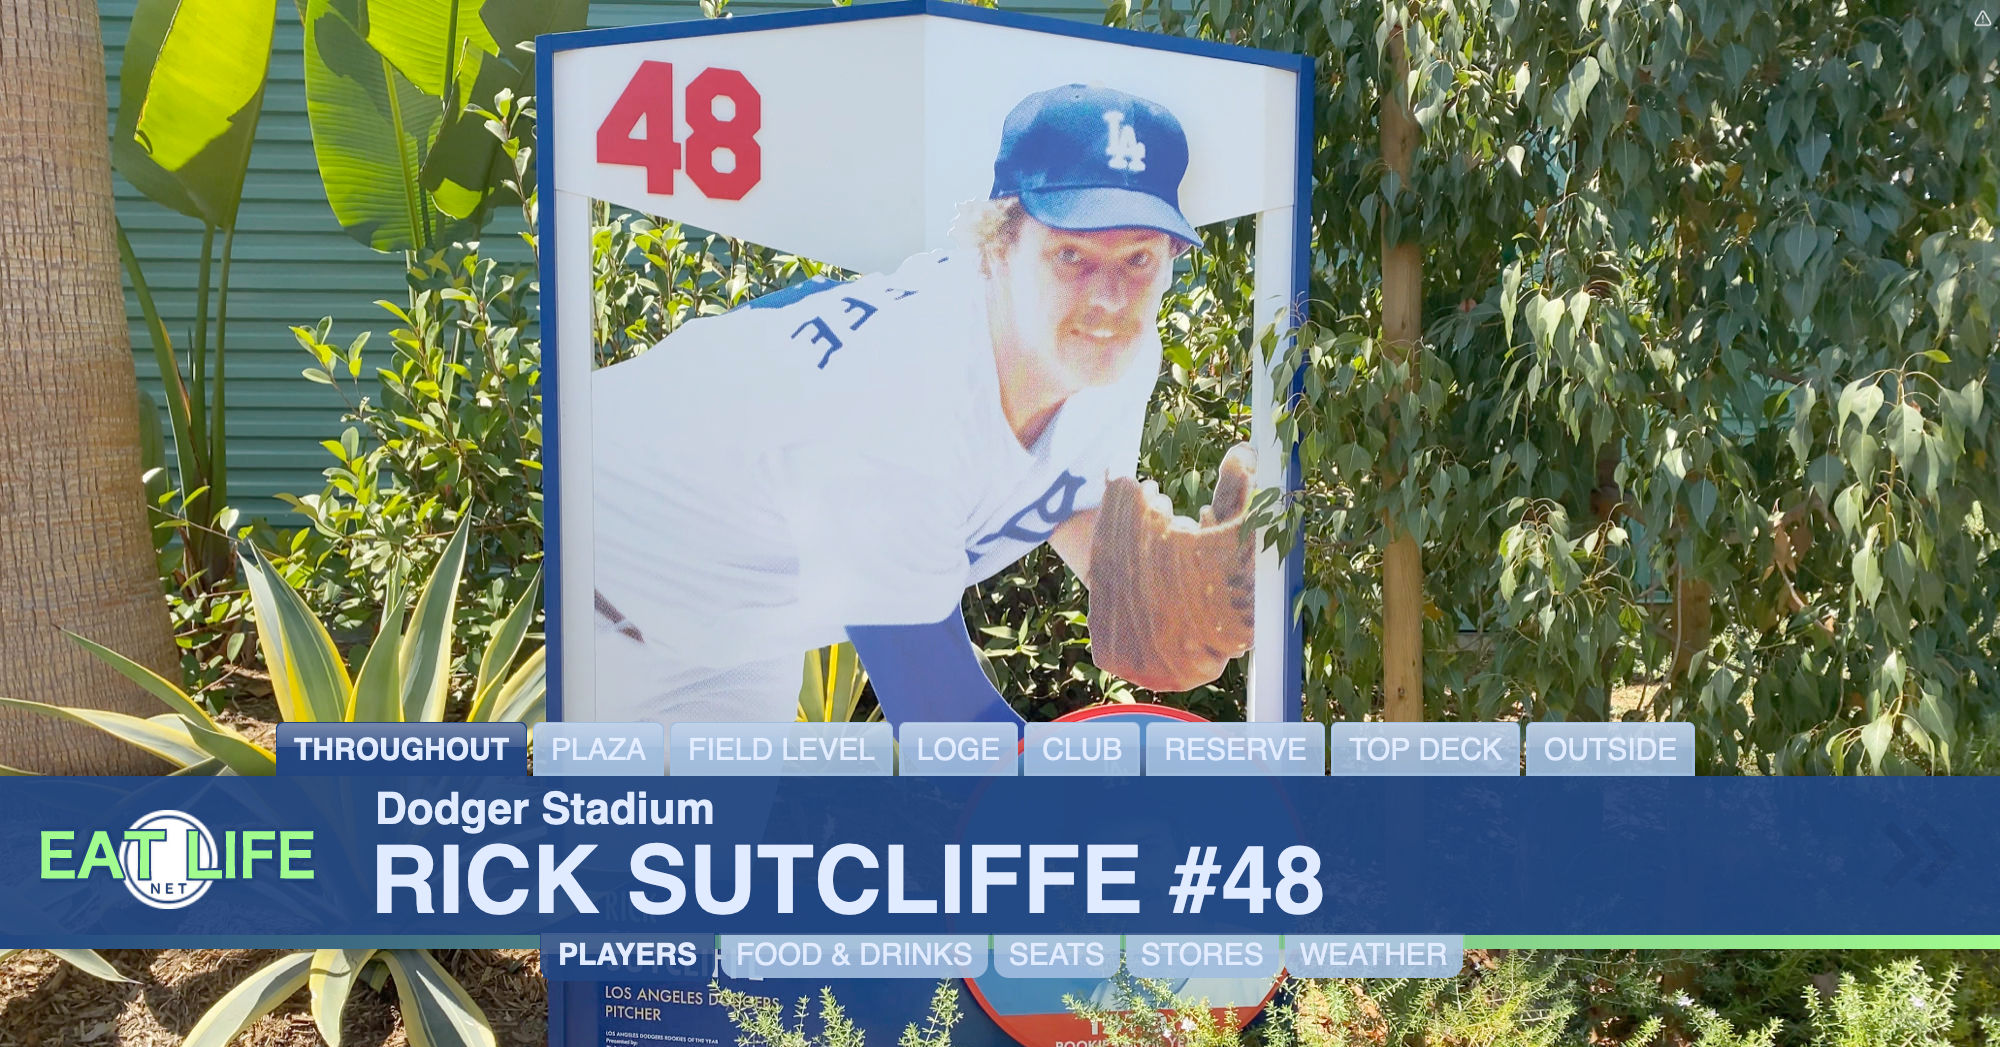 Rick Sutcliffe #48